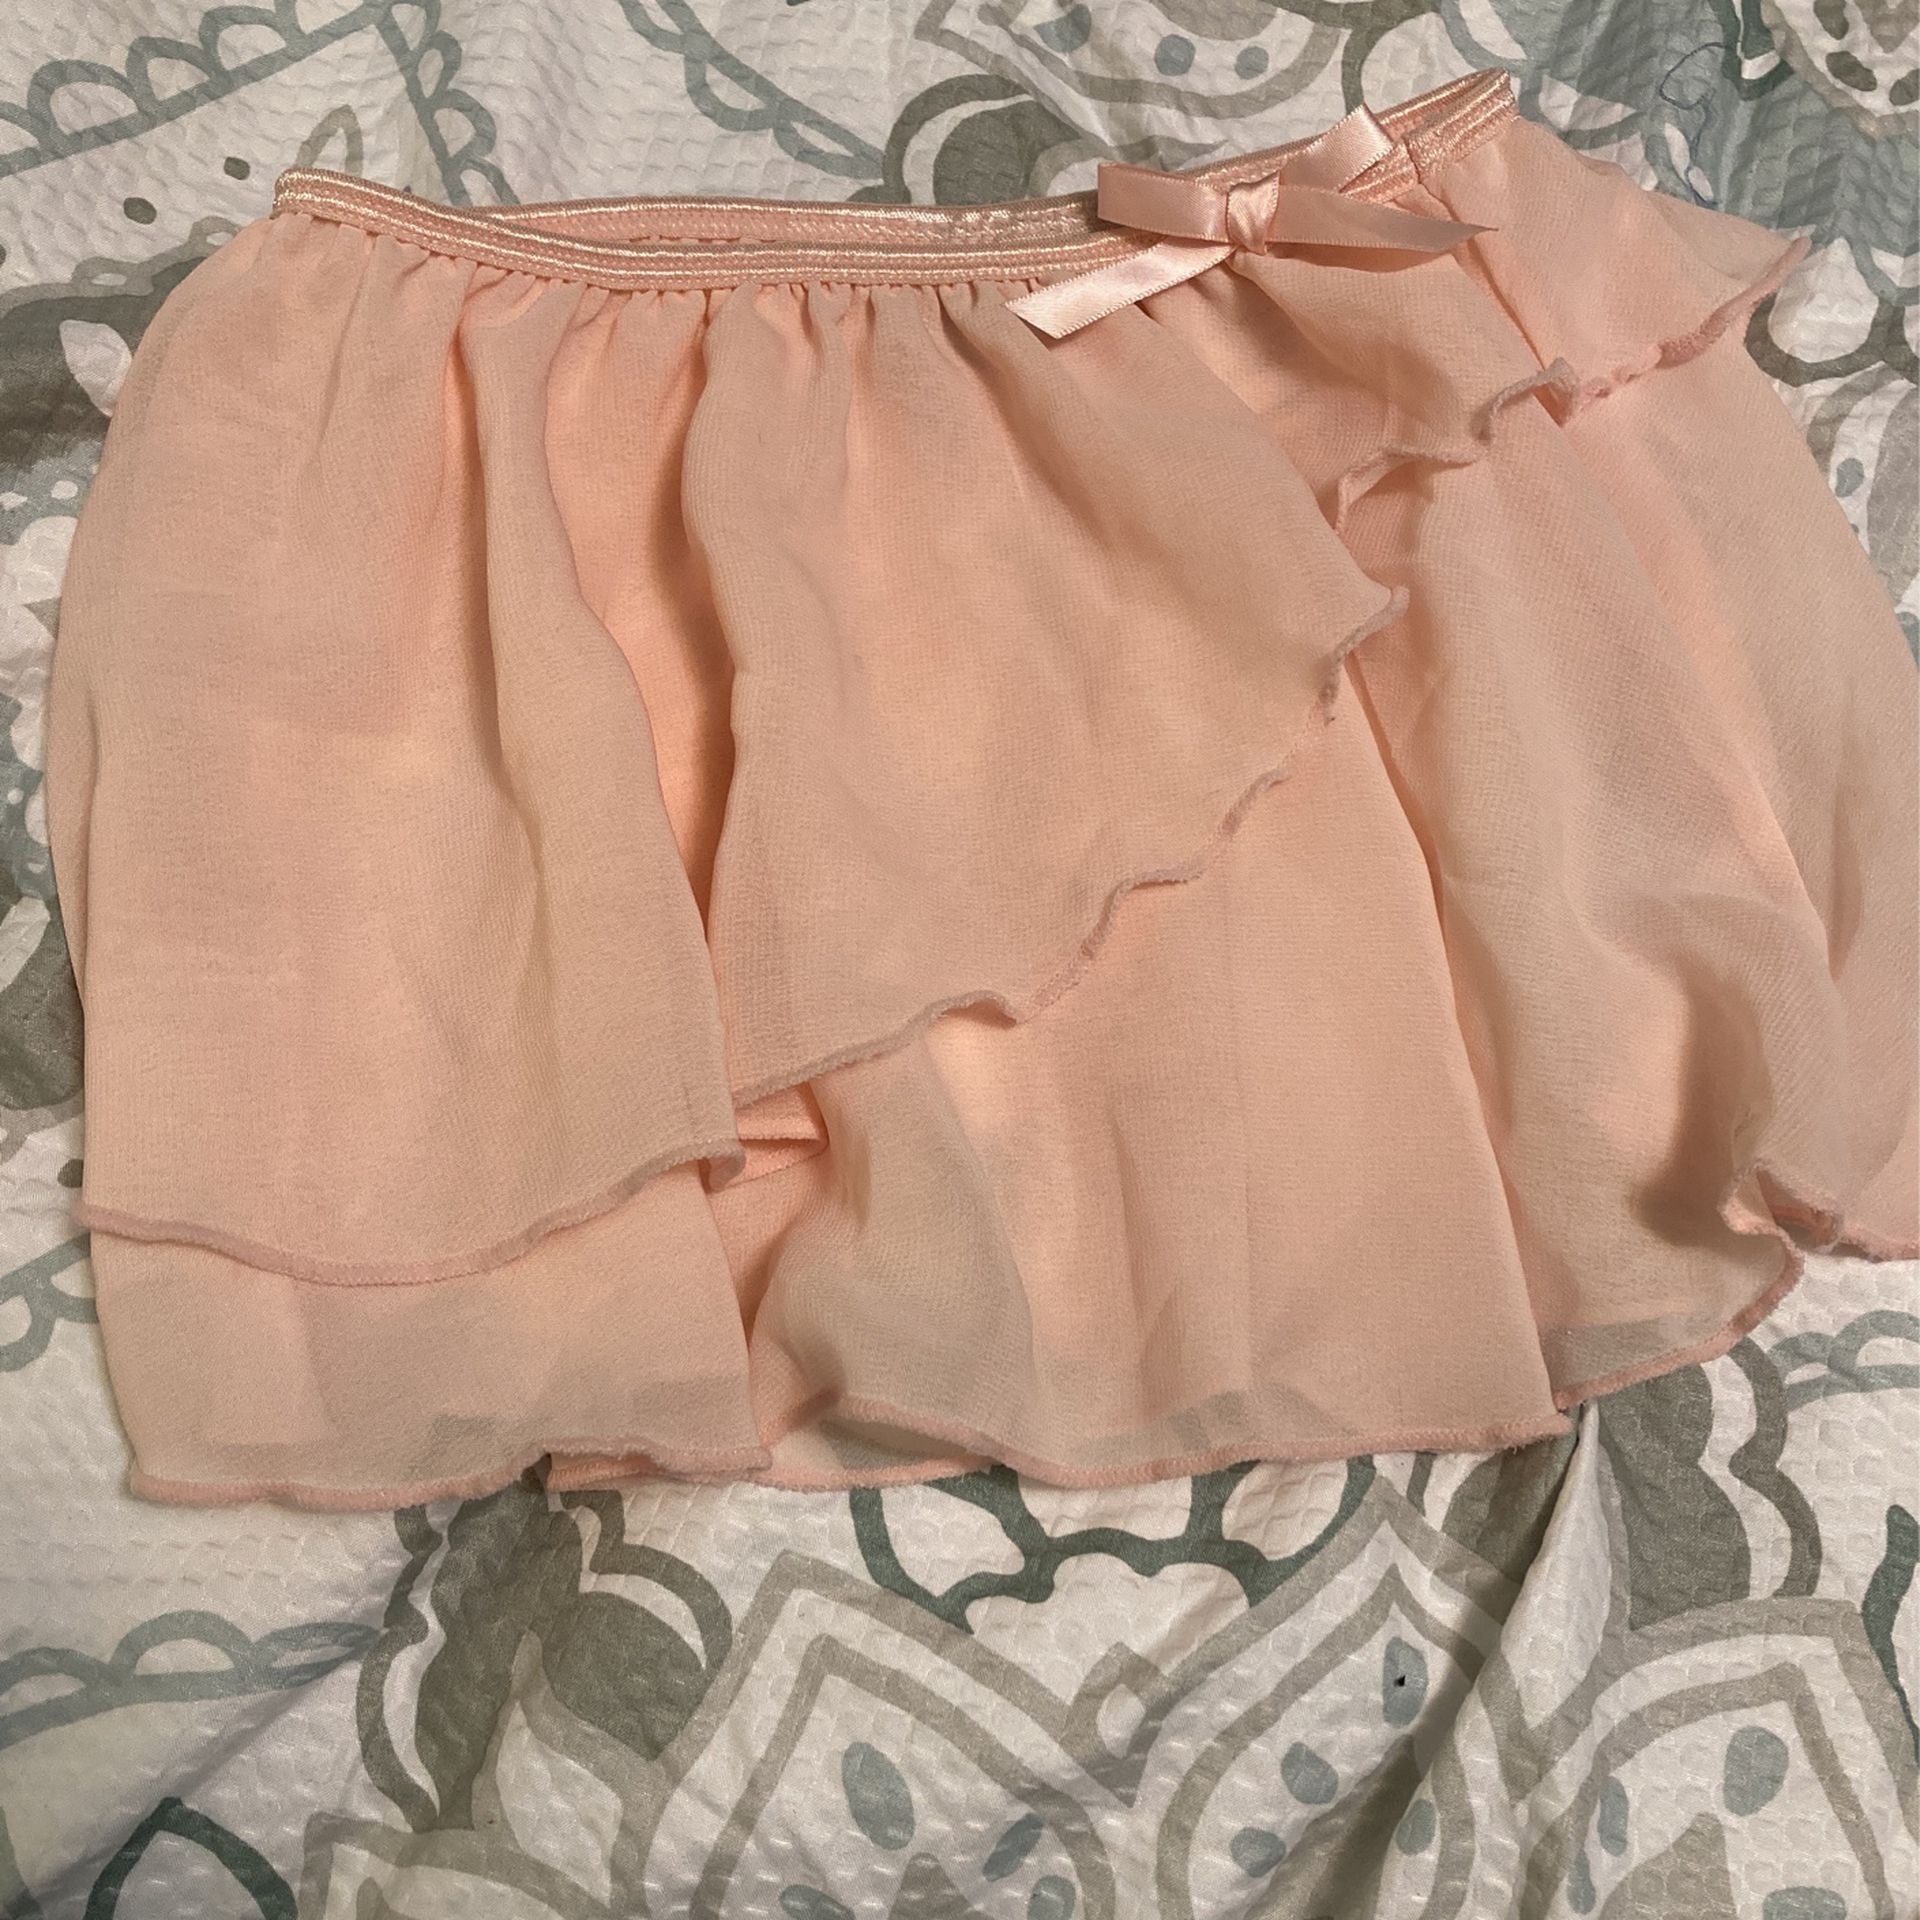 Pink Ballet Skirt, size 6